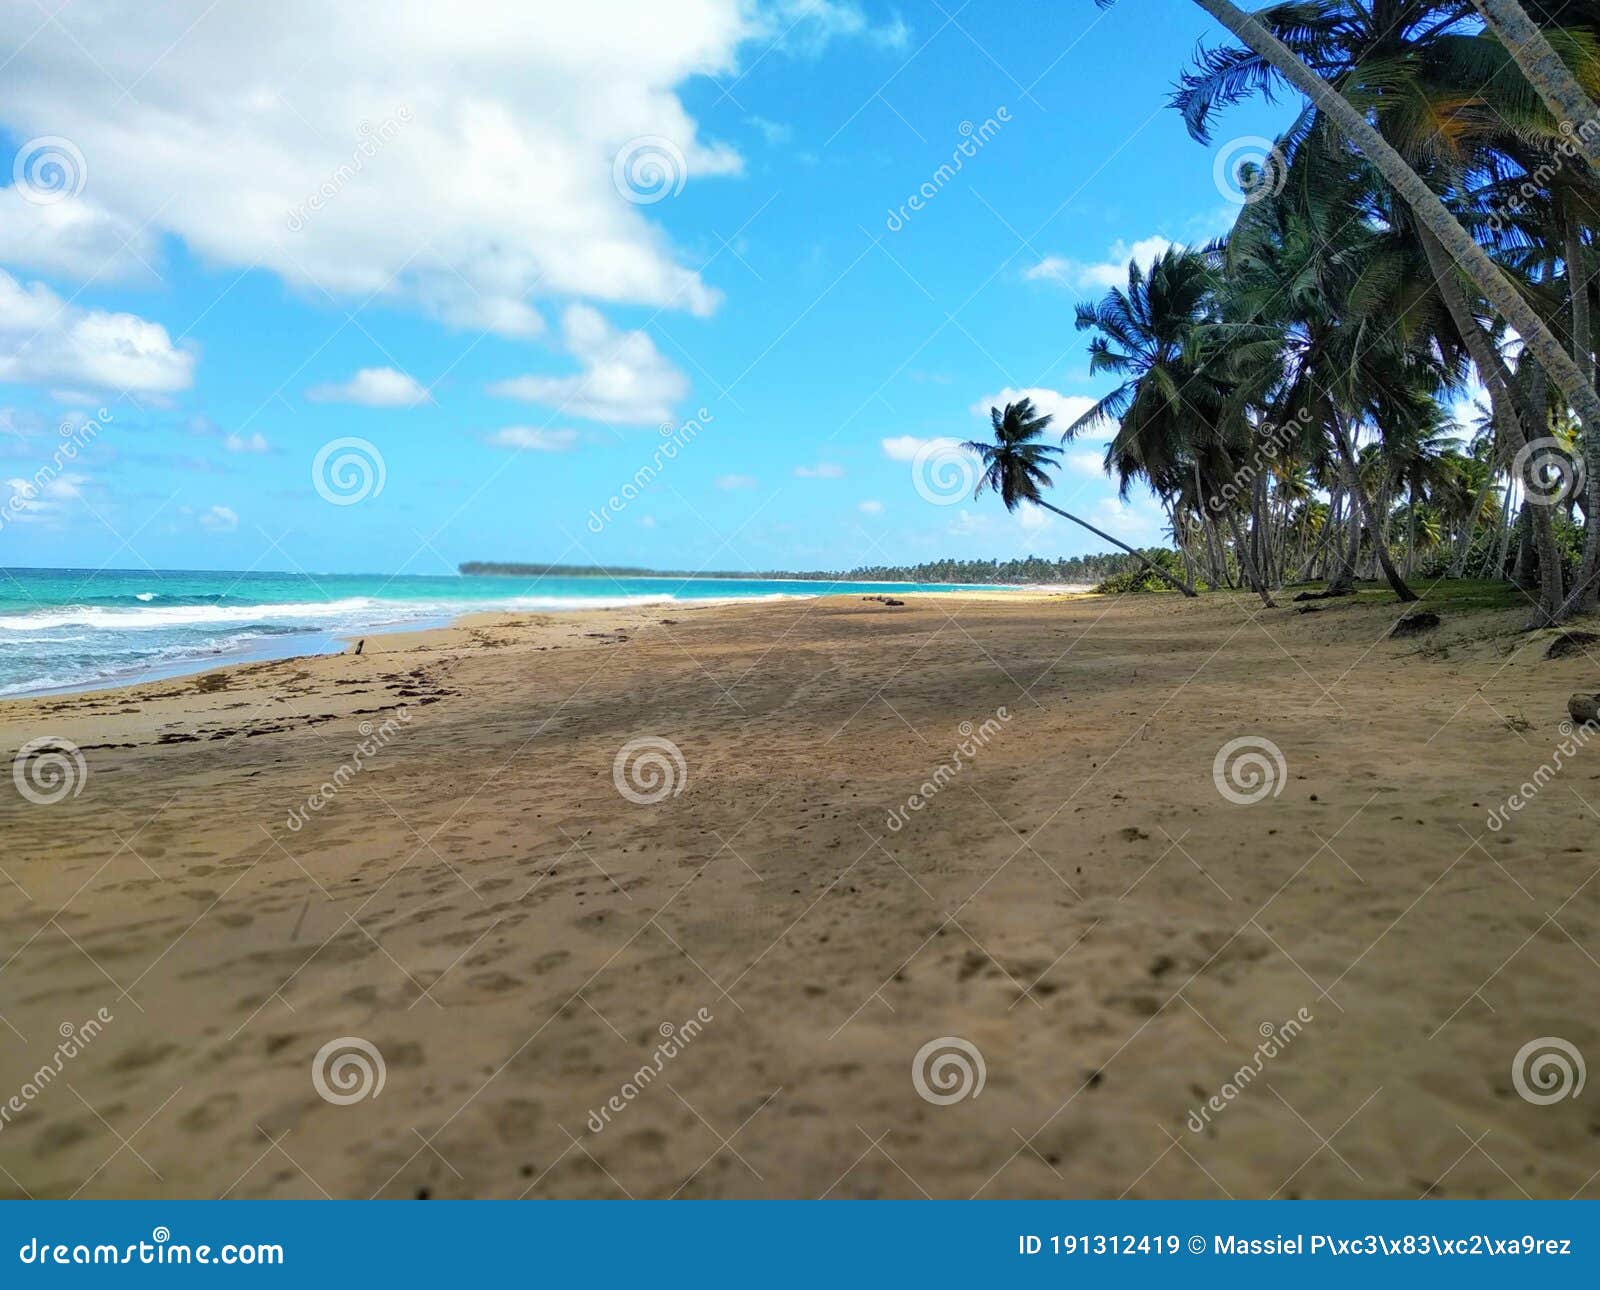 beautiful tropical beach bavaro puntacana dominican republic